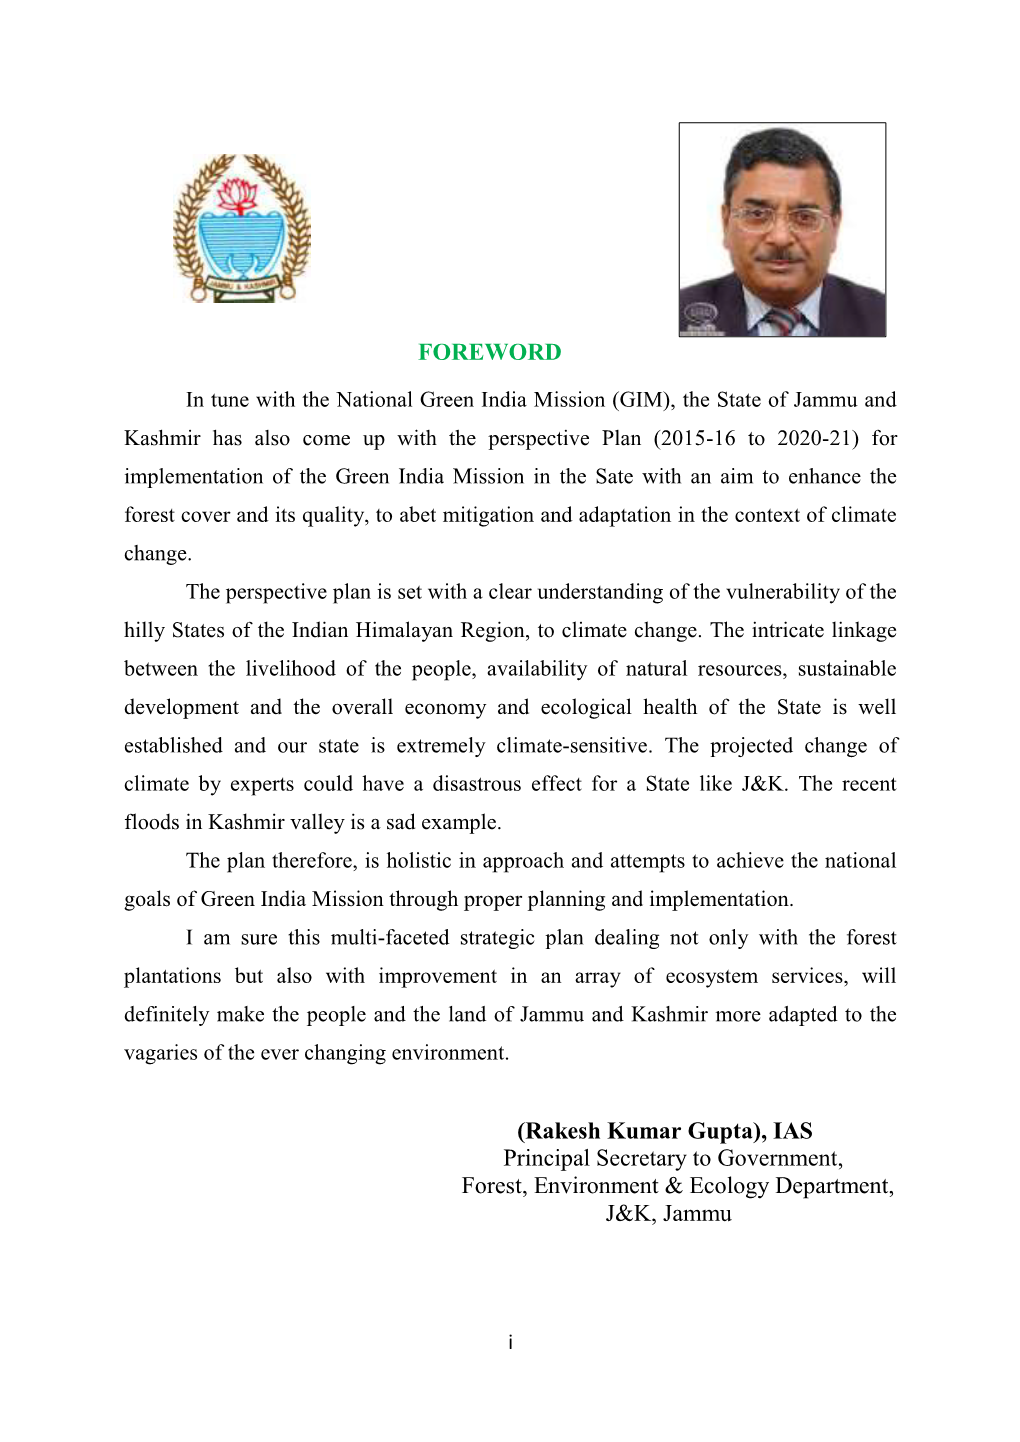 FOREWORD (Rakesh Kumar Gupta), IAS Principal Secretary to Government, Forest, Environment & Ecology Department, J&K, Ja